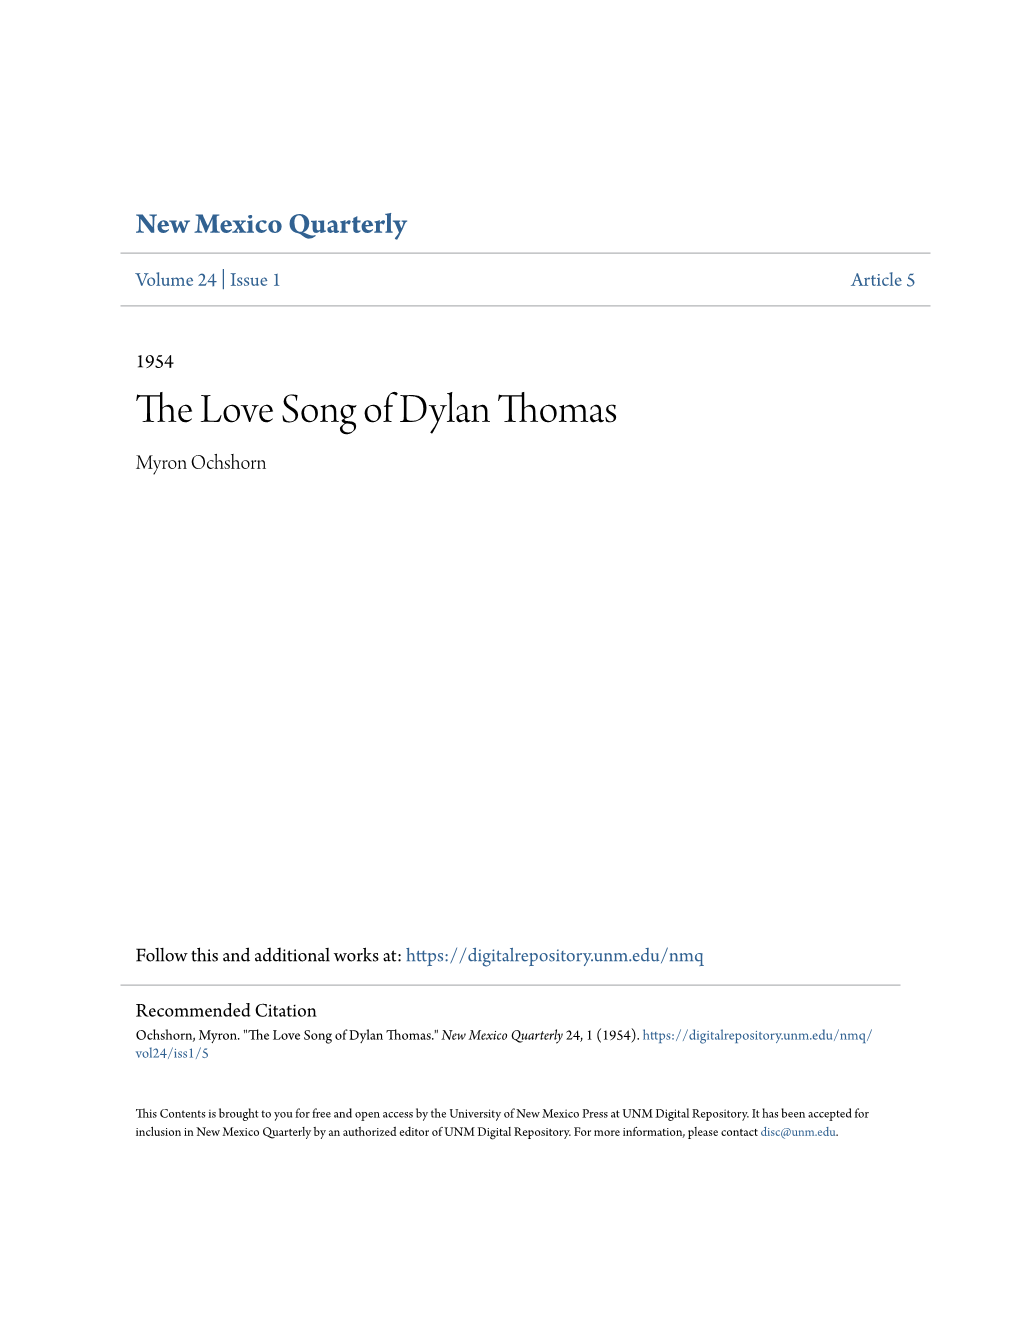 The Love Song of Dylan Thomas Myron Ochshorn